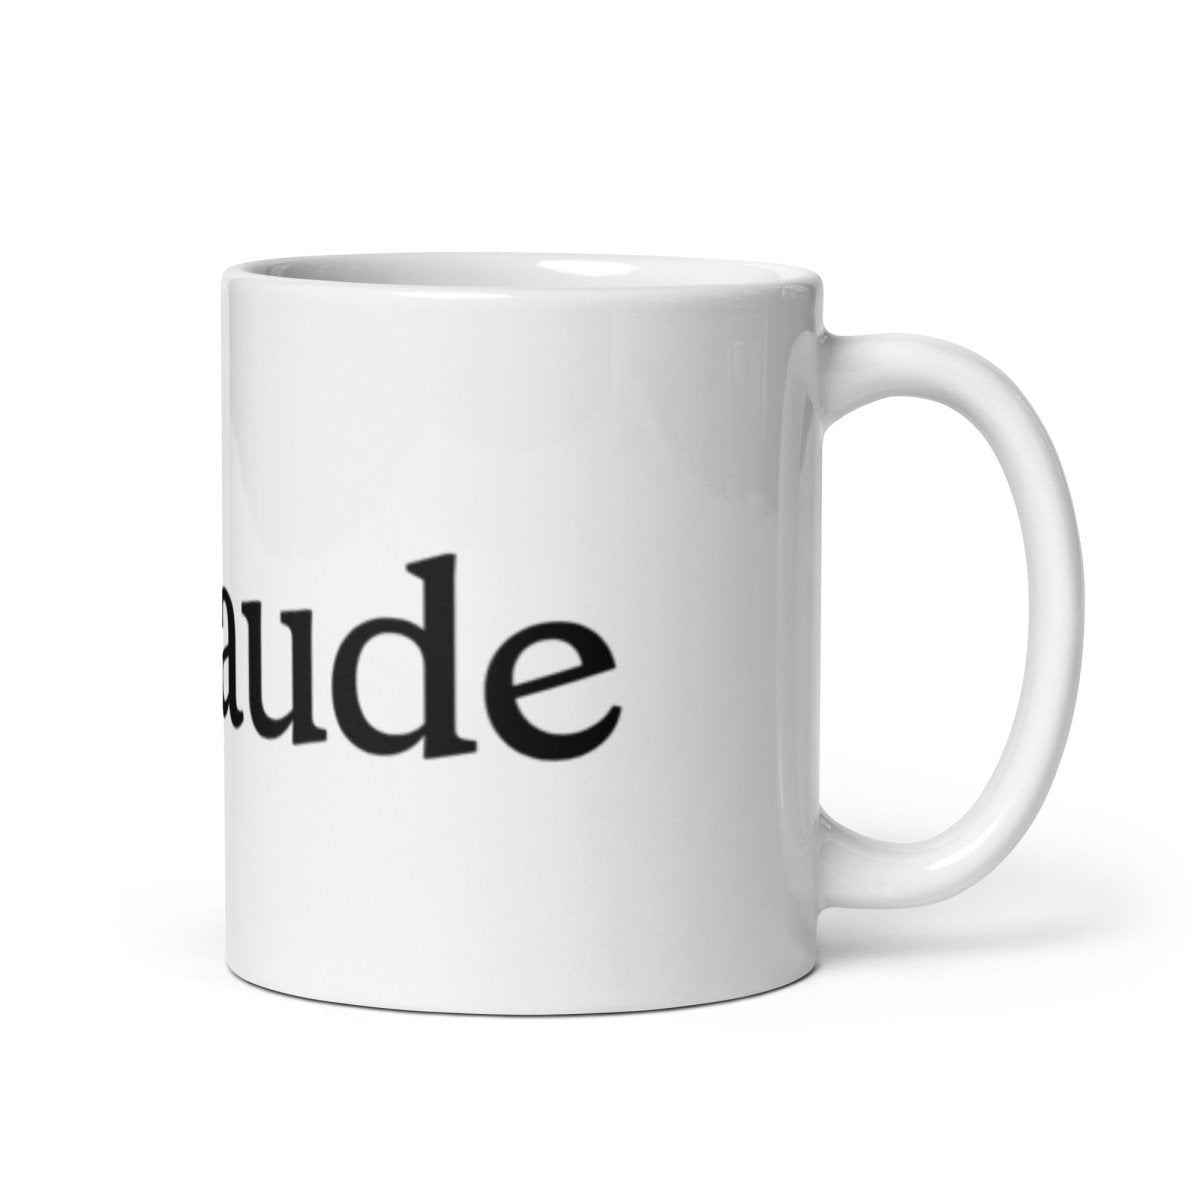 Claude Logo White Glossy Mug - 11 oz - AI Store